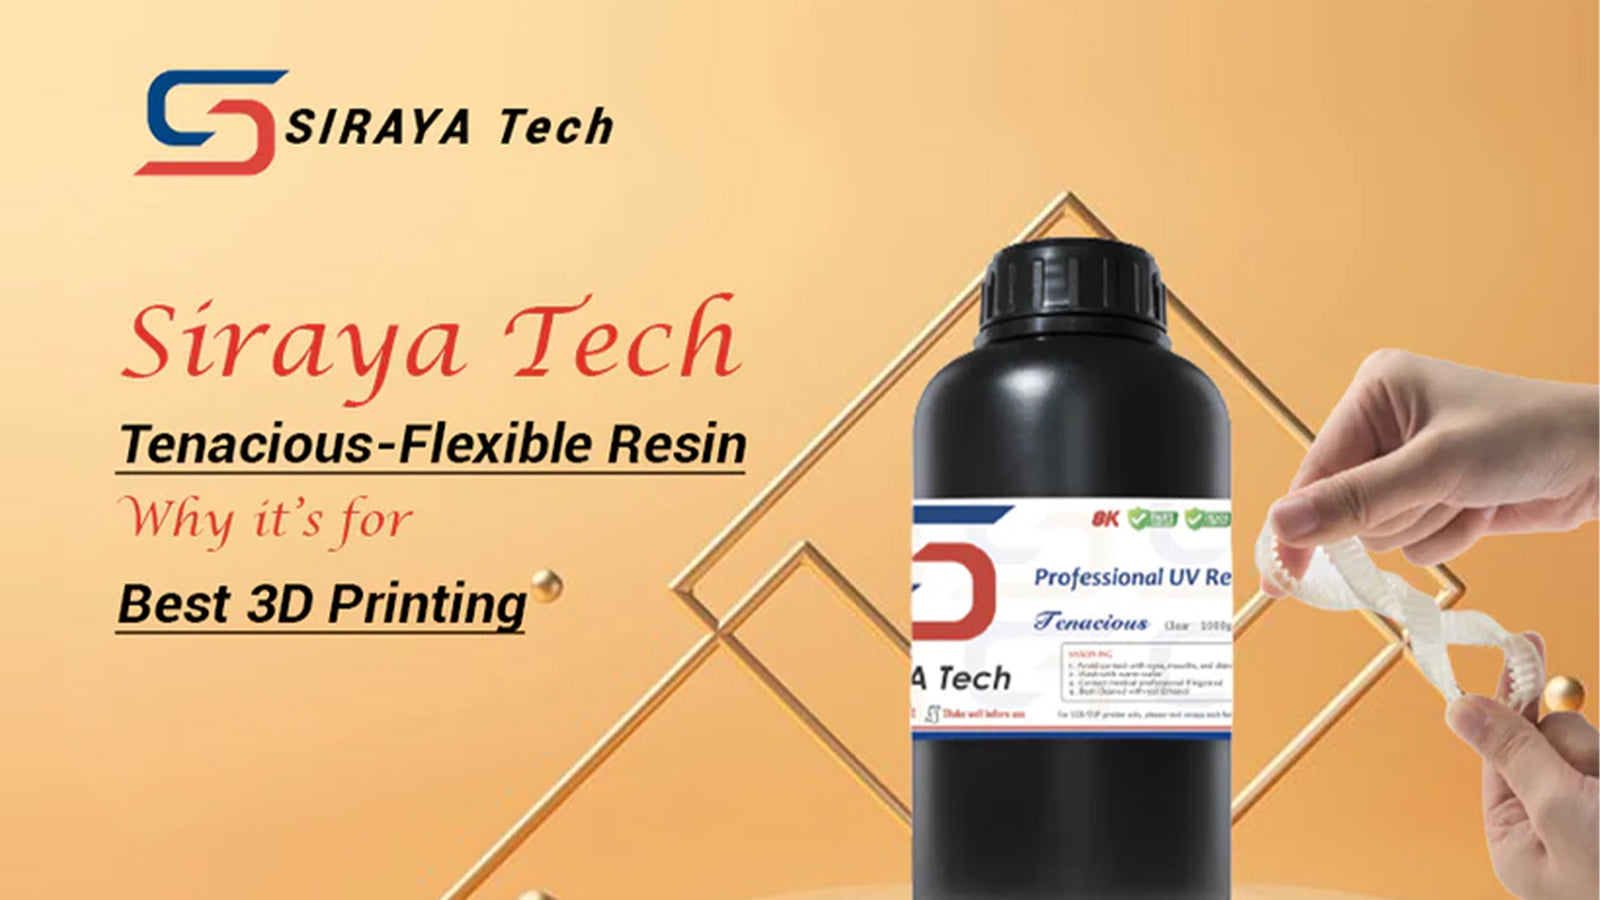 Siraya Tech Tenacious-Flexible Resin: Why it’s for Best 3D Printing